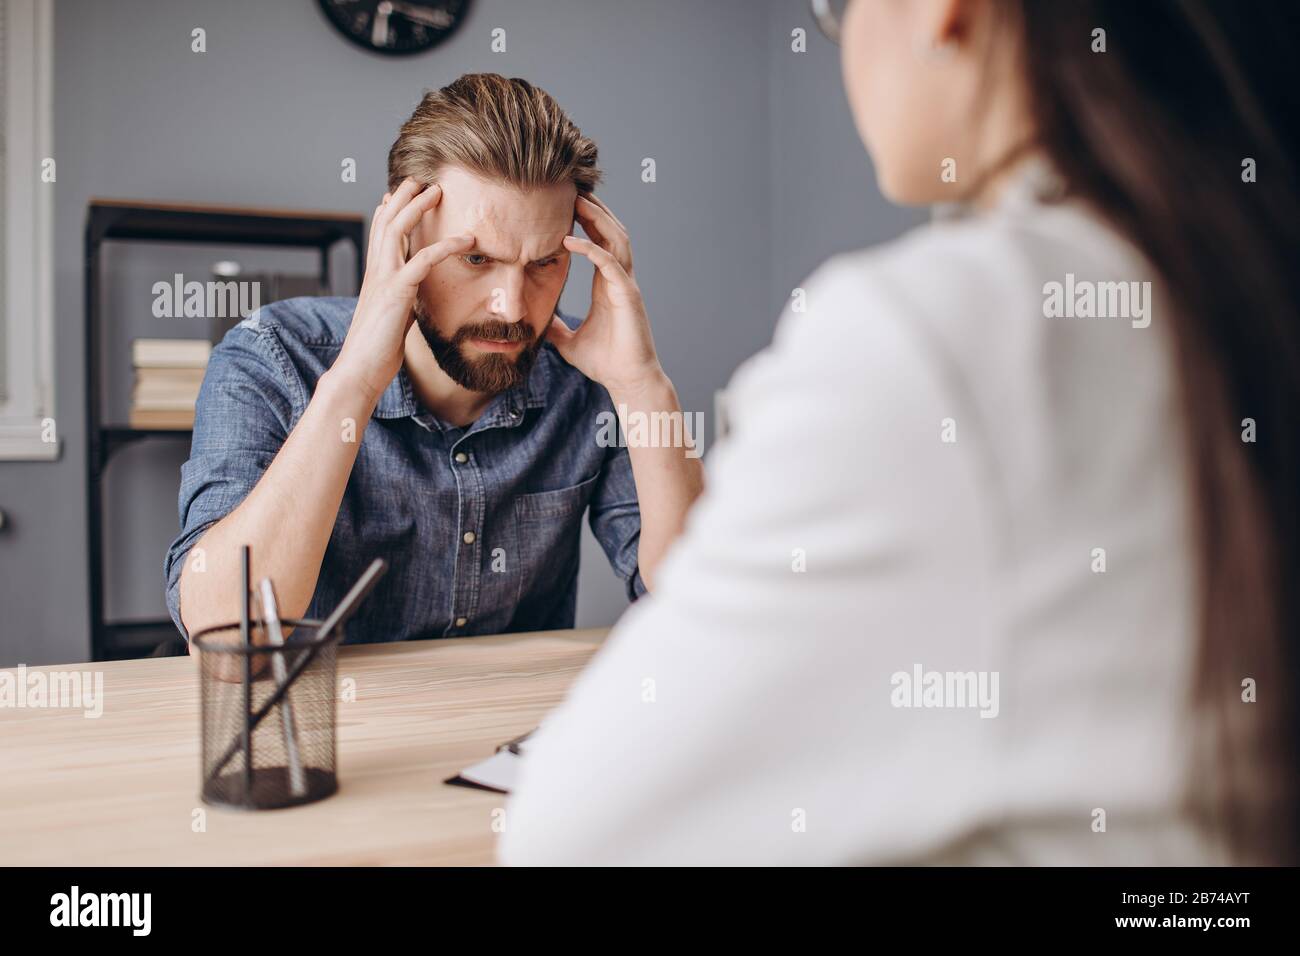 A Downcast Patient at A Psychologist Appointment Stock Photo